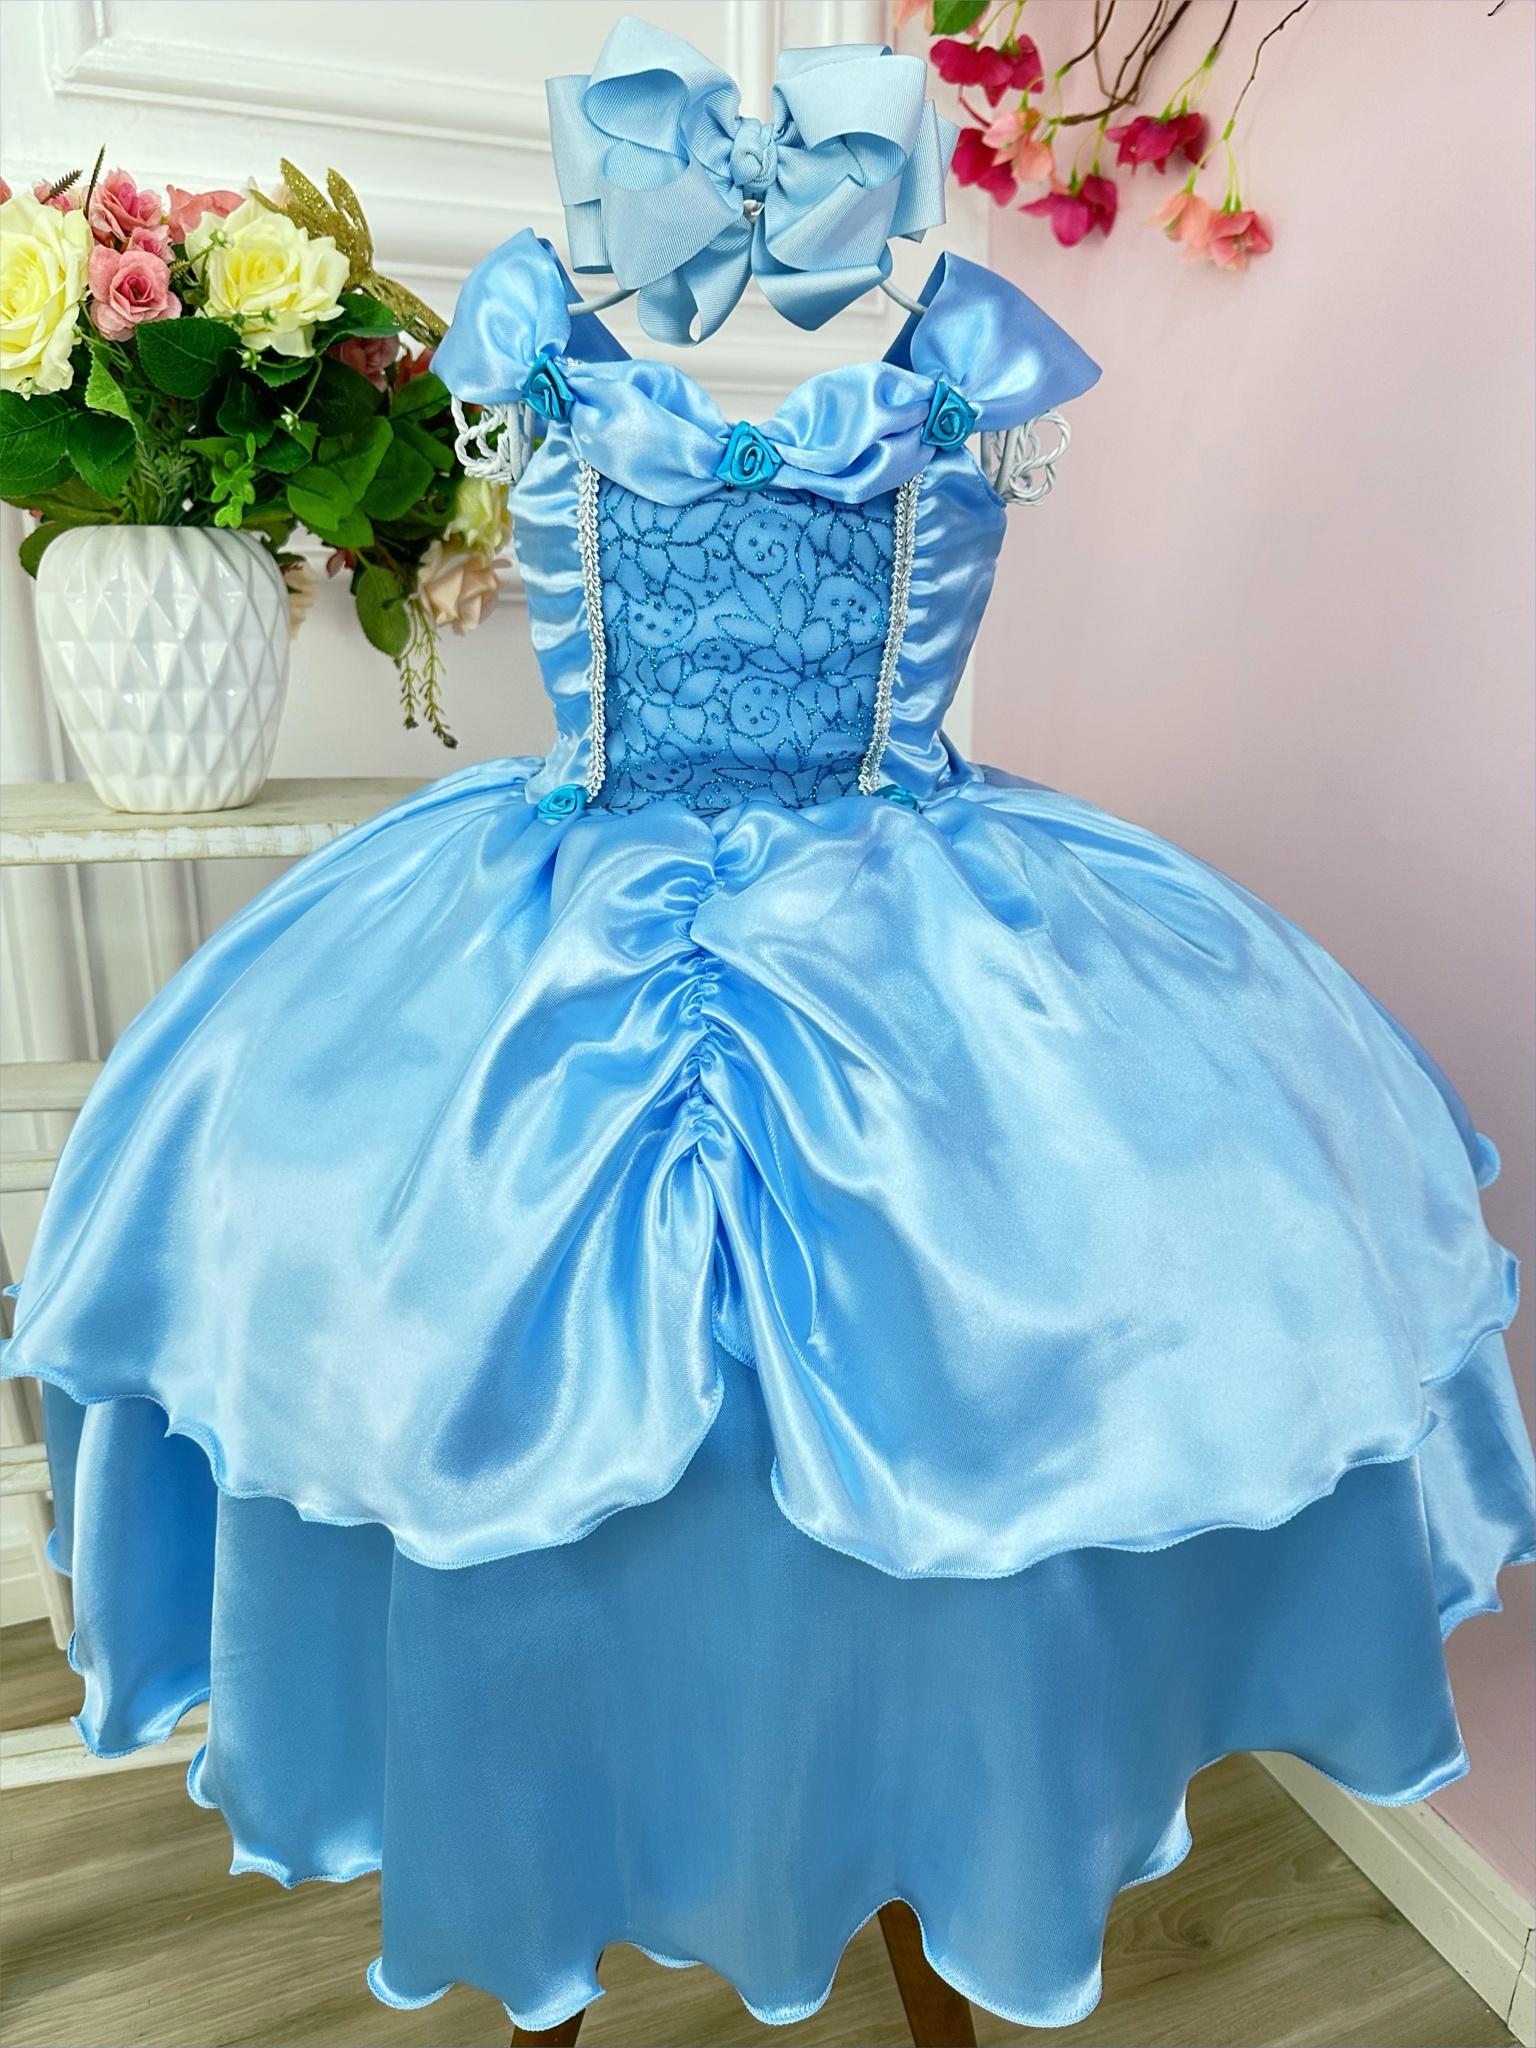 Fantasia Infantil Frozen e Cinderela C/ Renda Azul Strass